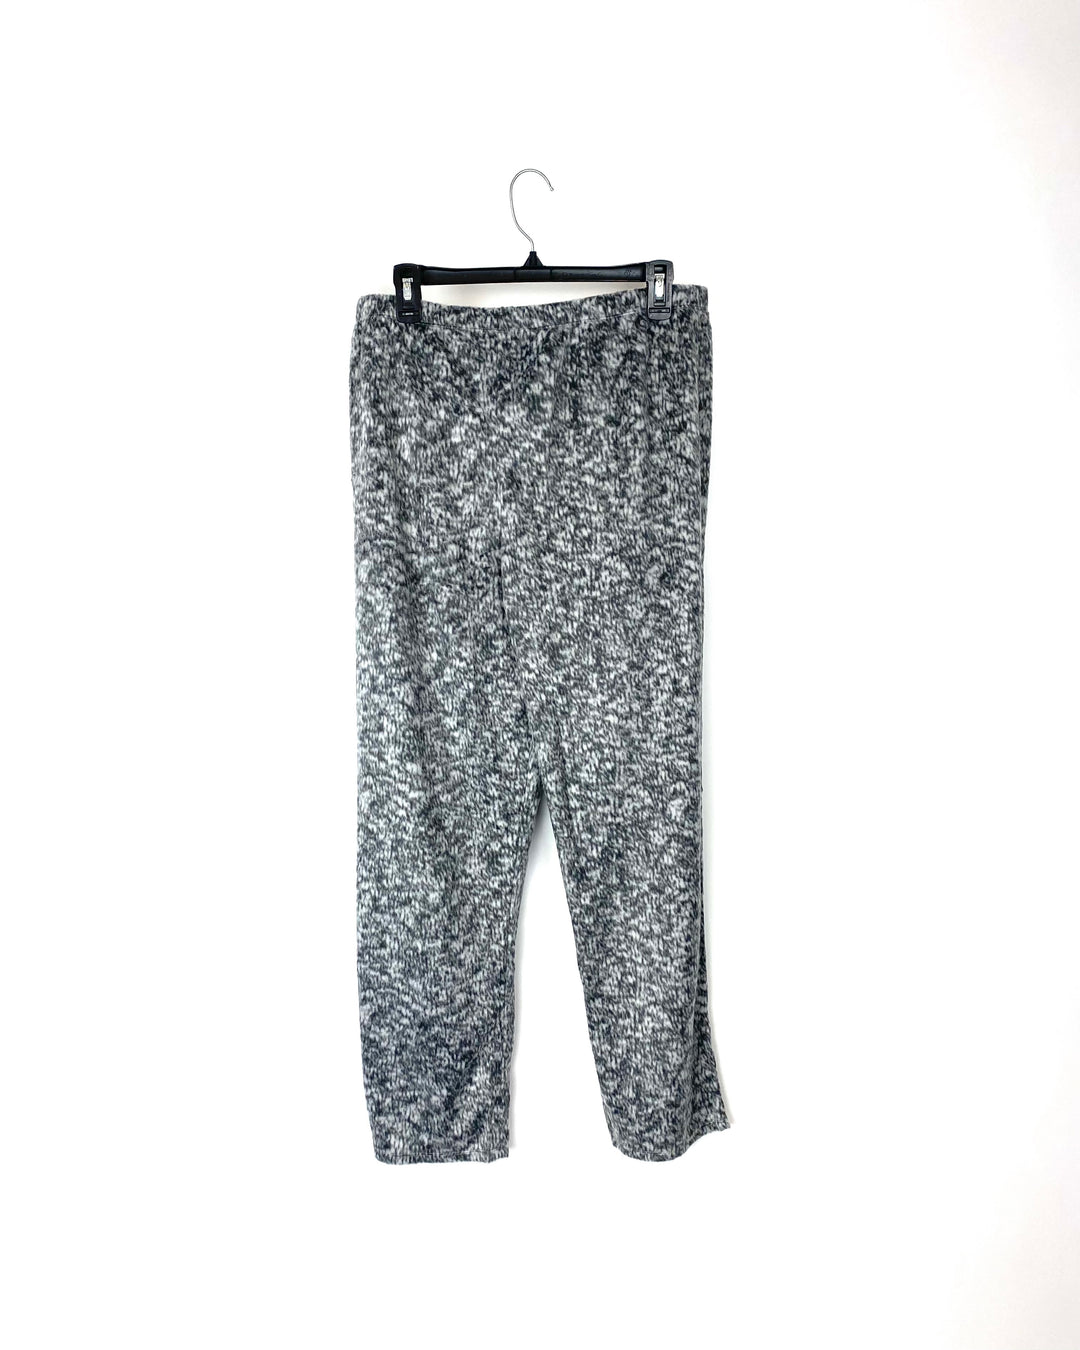 Gray Printed Pajama Pants - Large